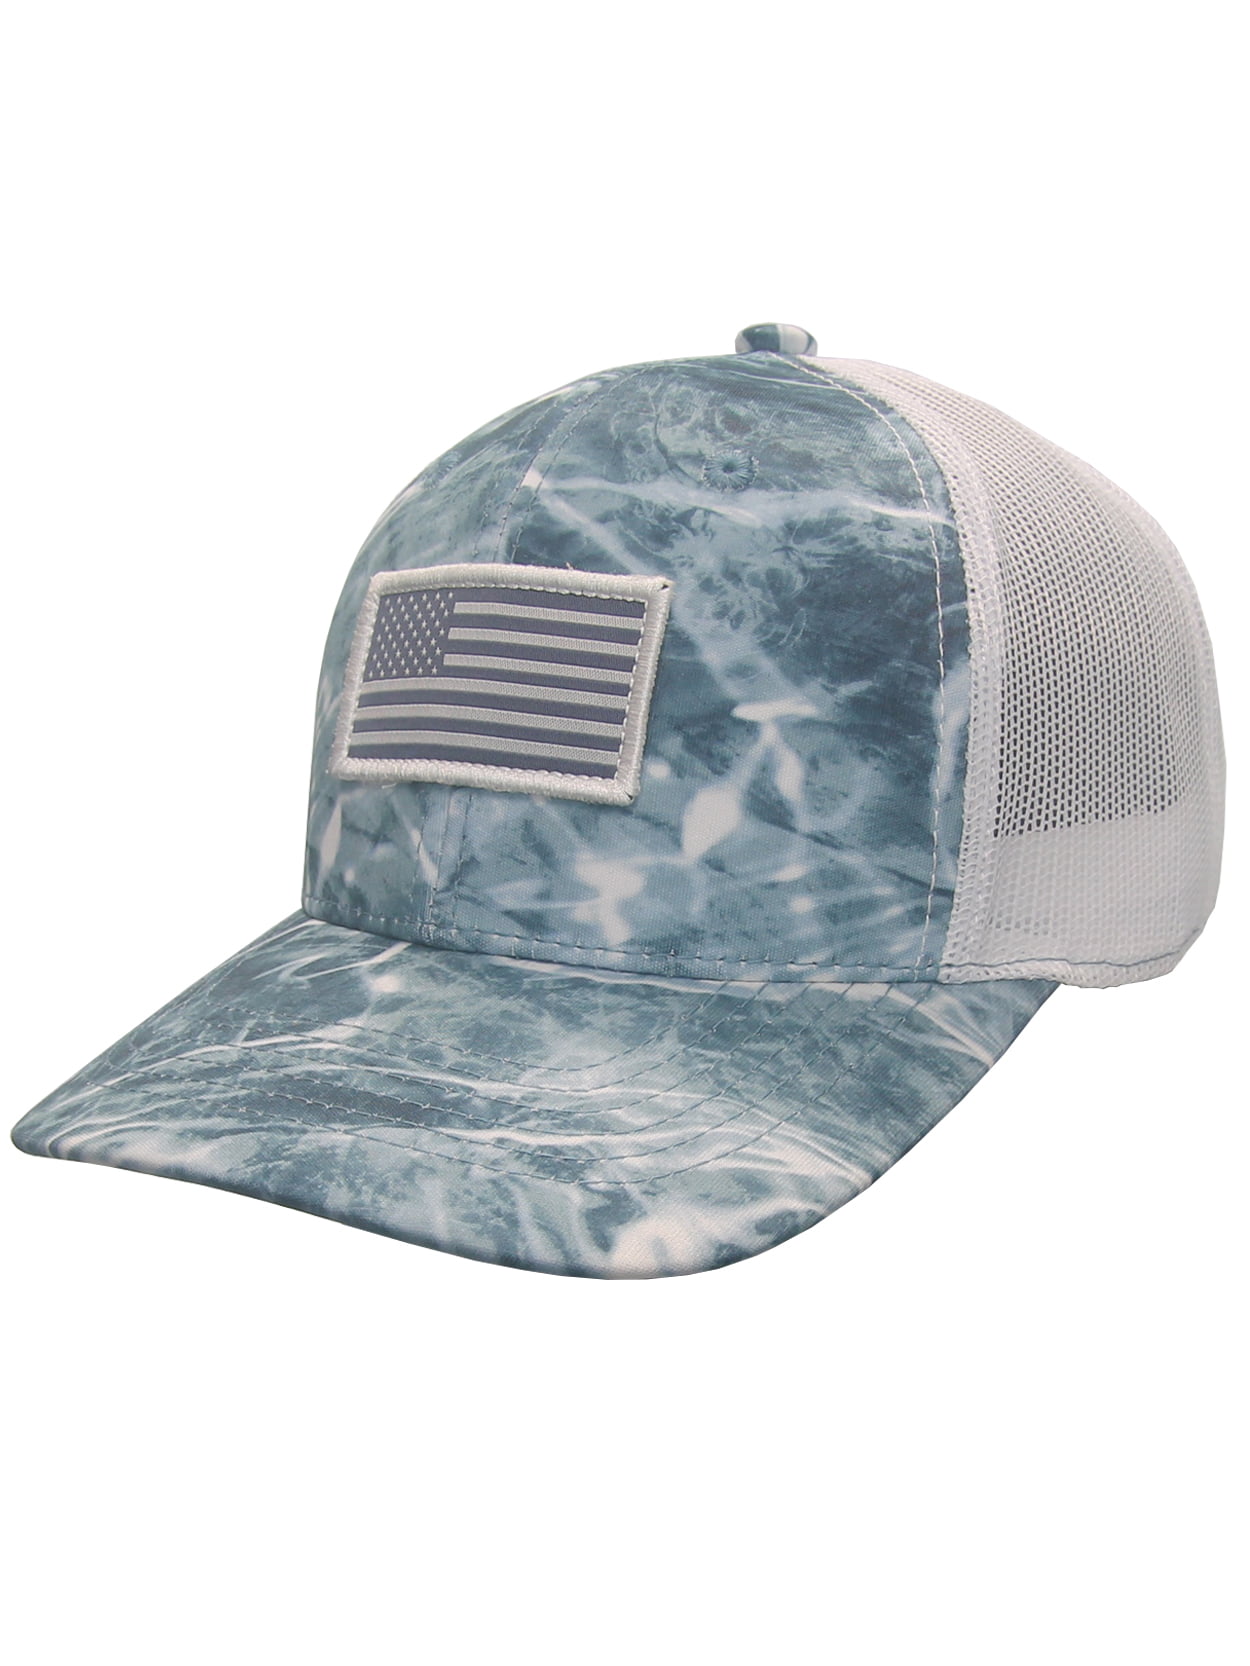 New Men's USA Flag Grey/Blue Adjustable Baseball Cap Hat